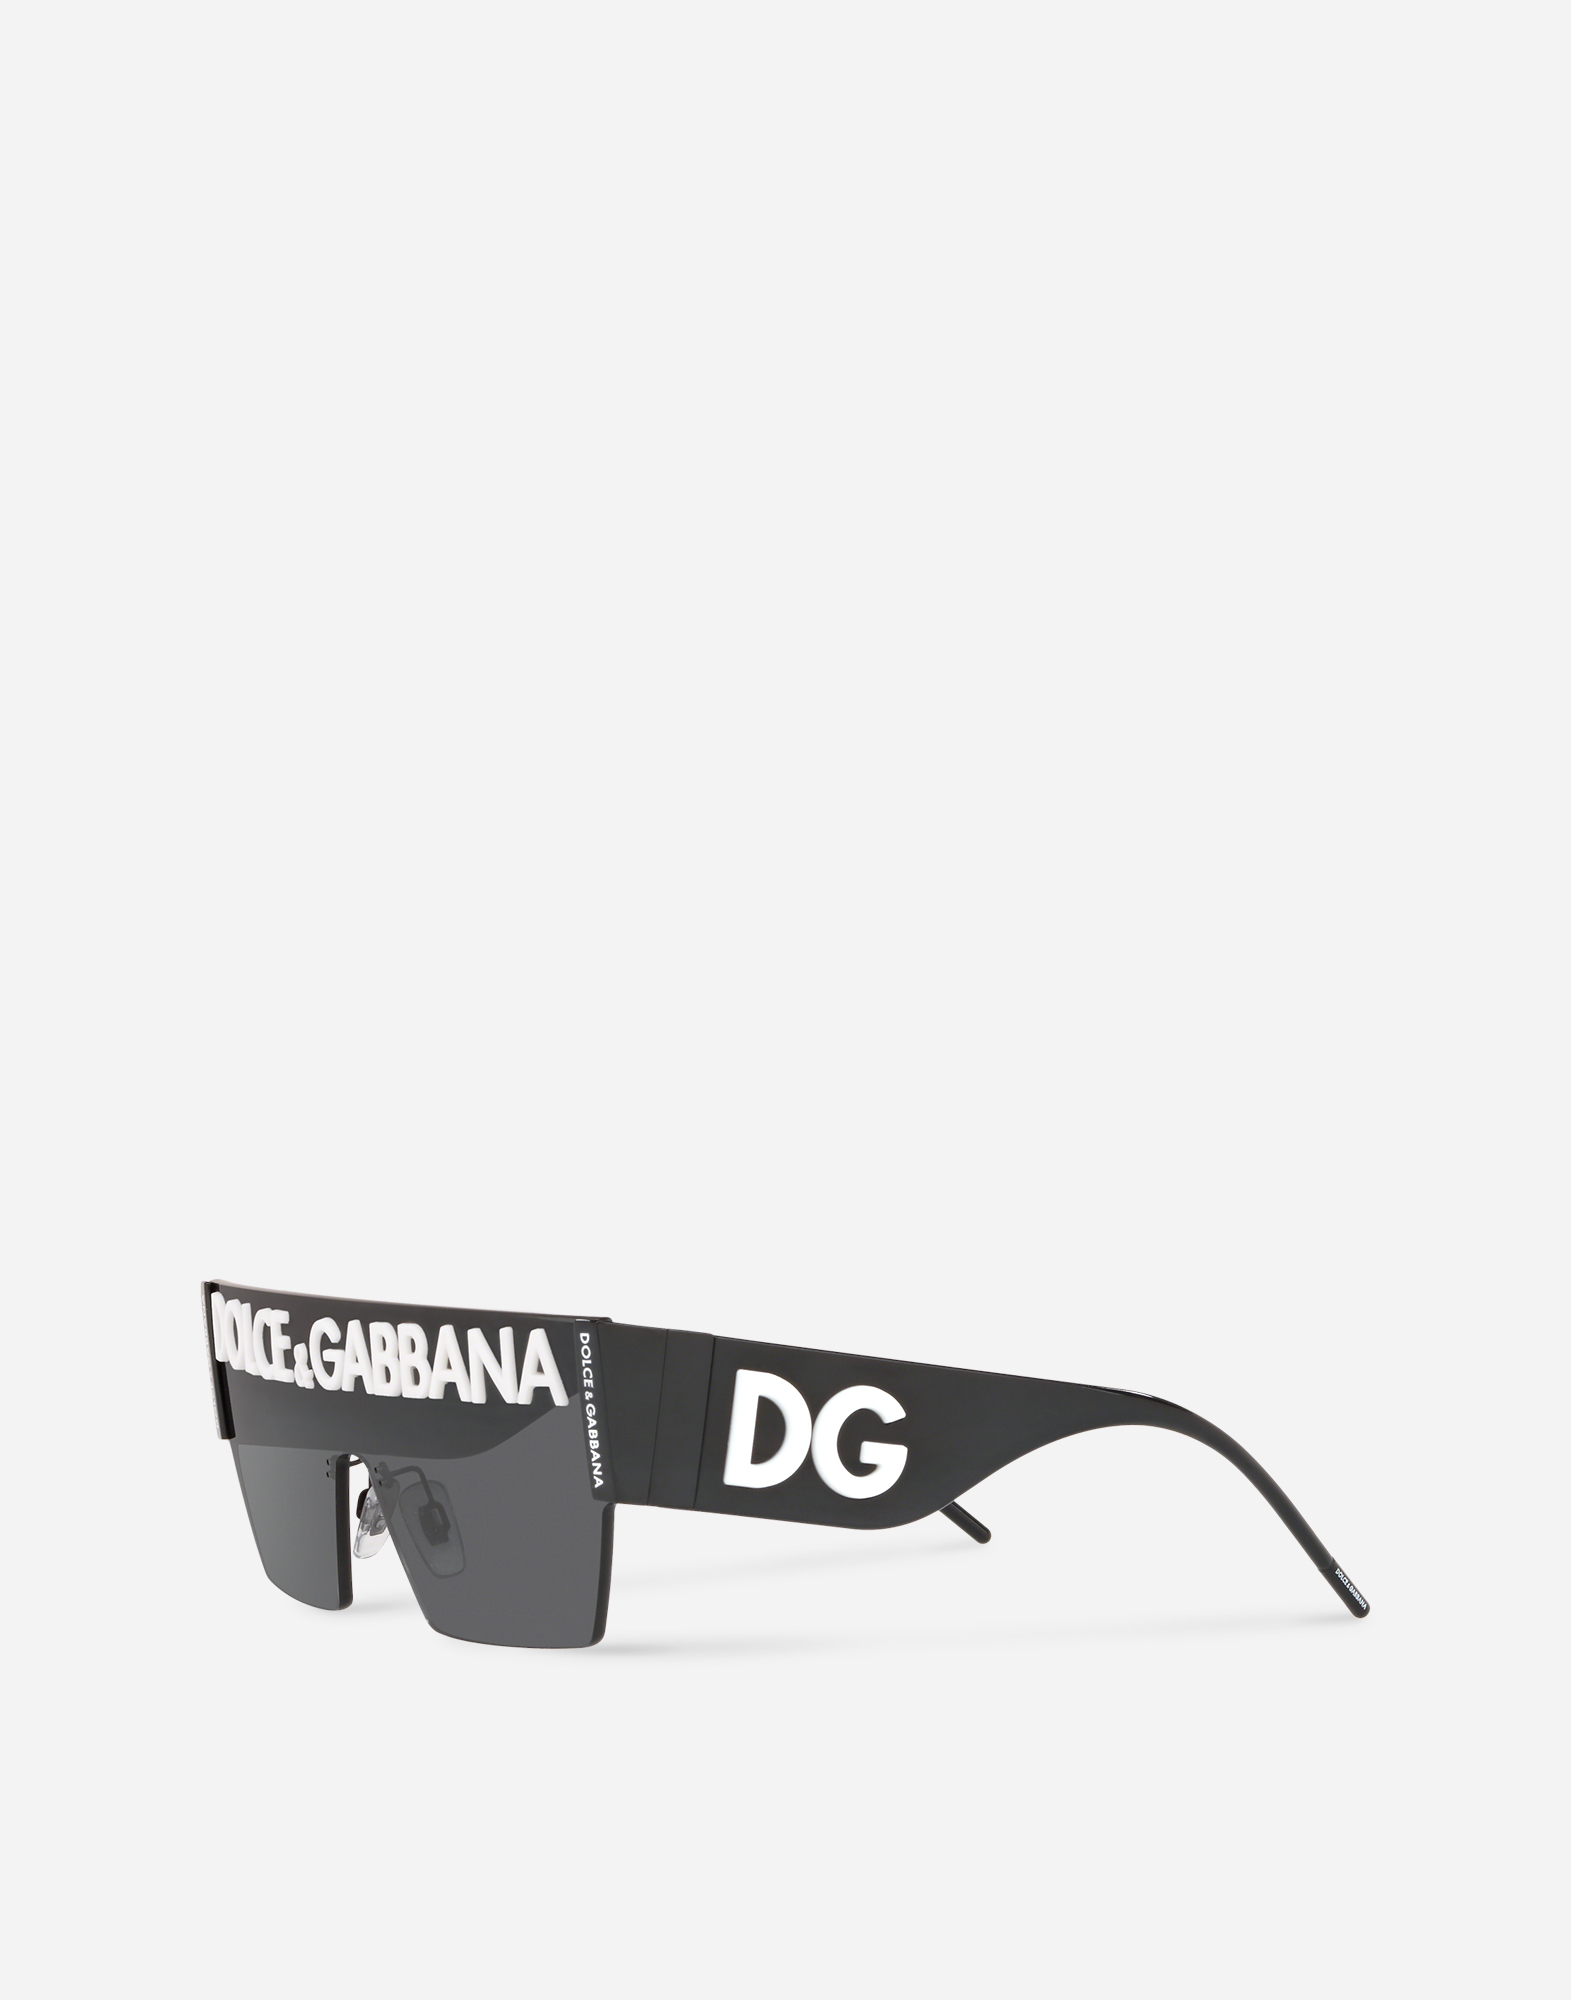 dolce gabbana mens sunglasses for sale